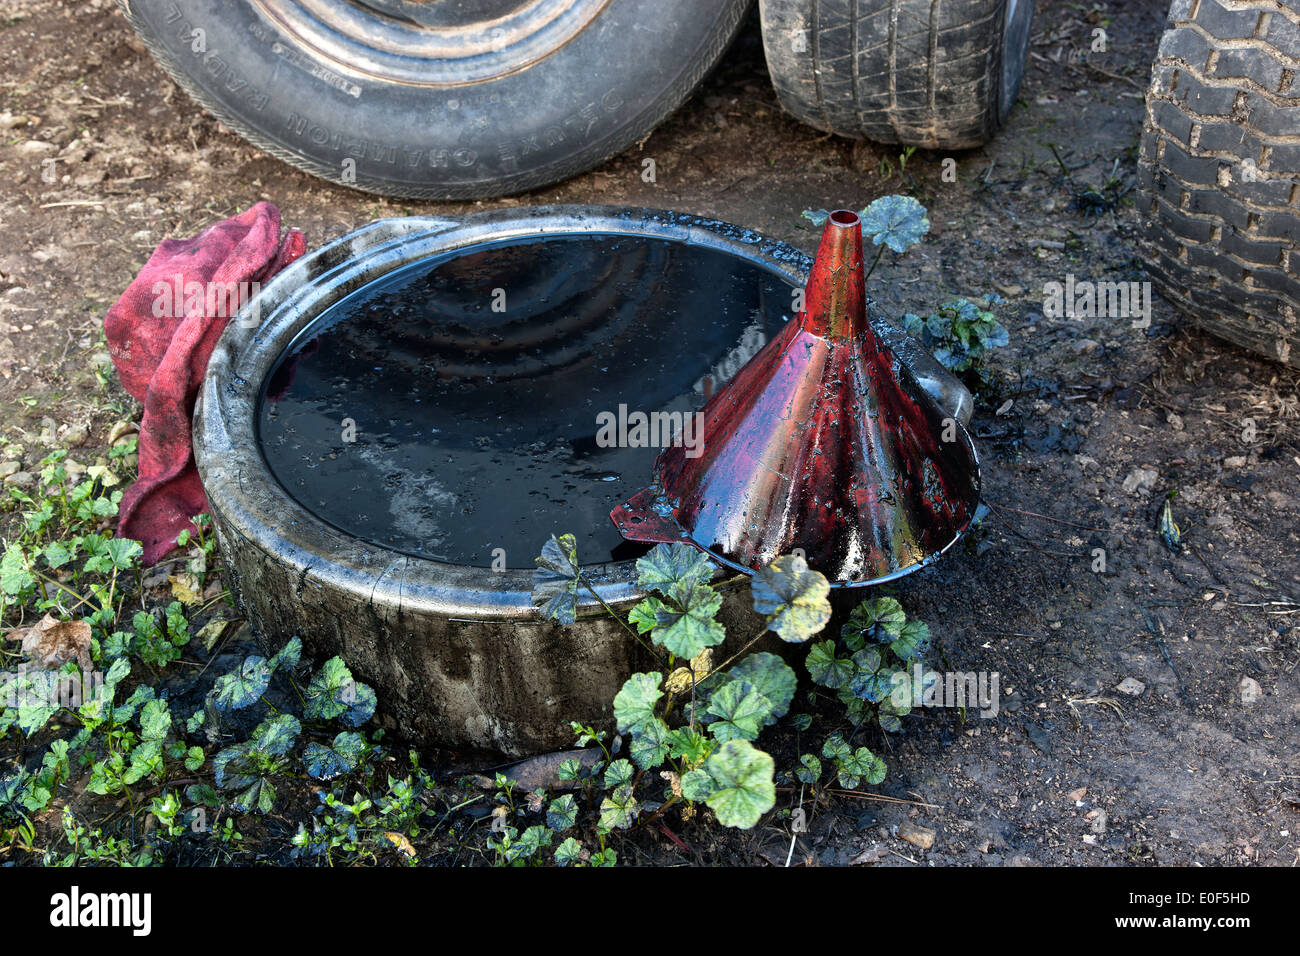 Ölablass pan mit schmutzigen Motoröl verschmutzen Boden & Flora. Stockfoto